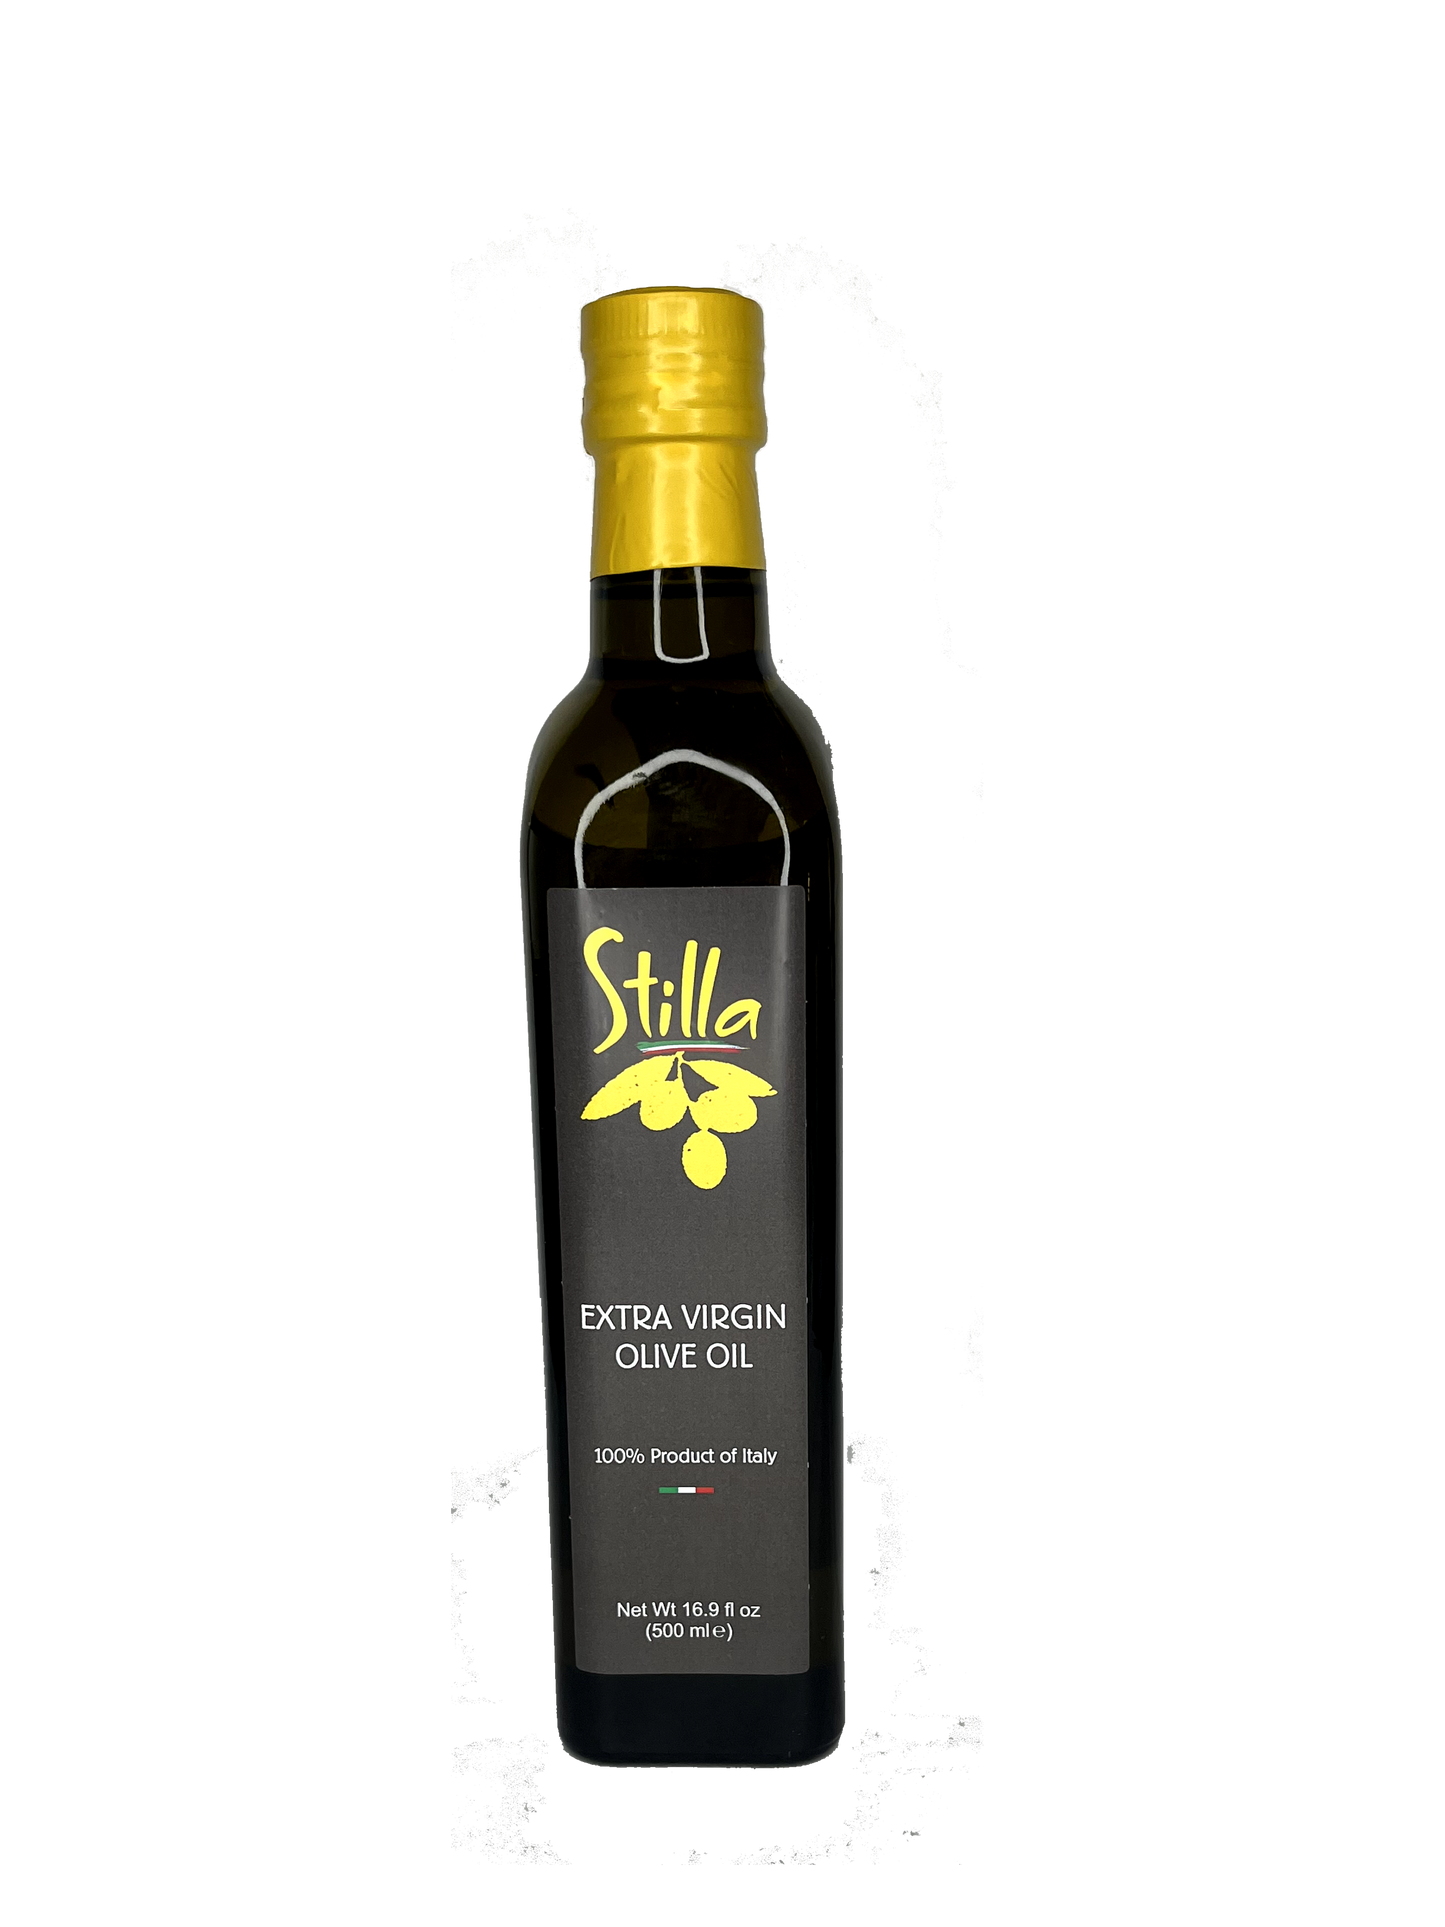 Stilla olive oil